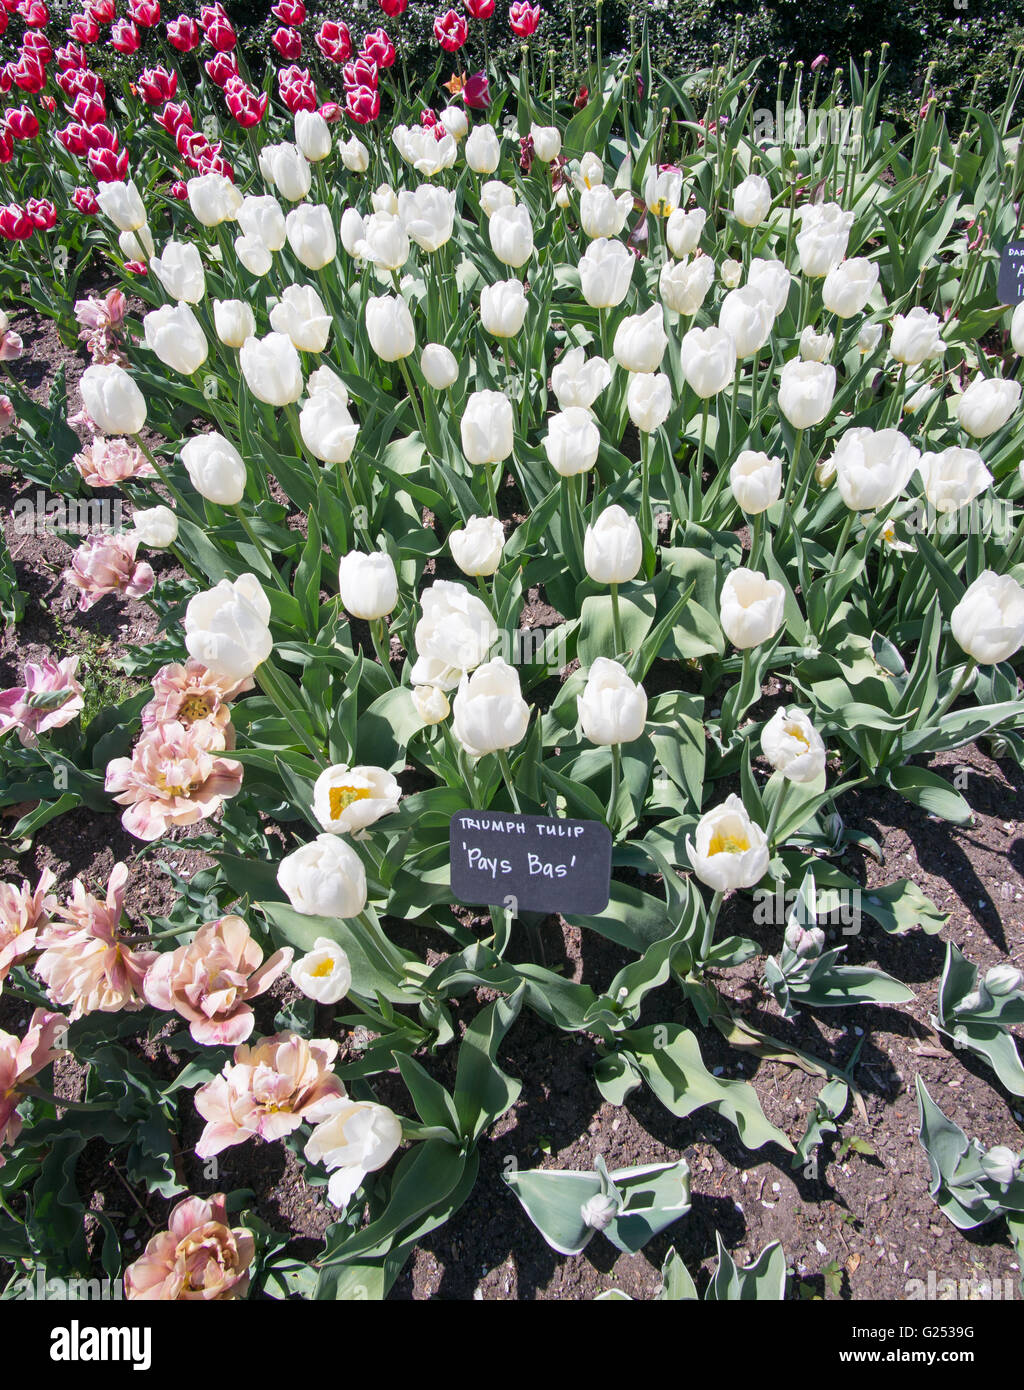 Trionfo bianco tulip Pays Bas Brooklyn Botanic Garden, New York, Stati Uniti d'America Foto Stock